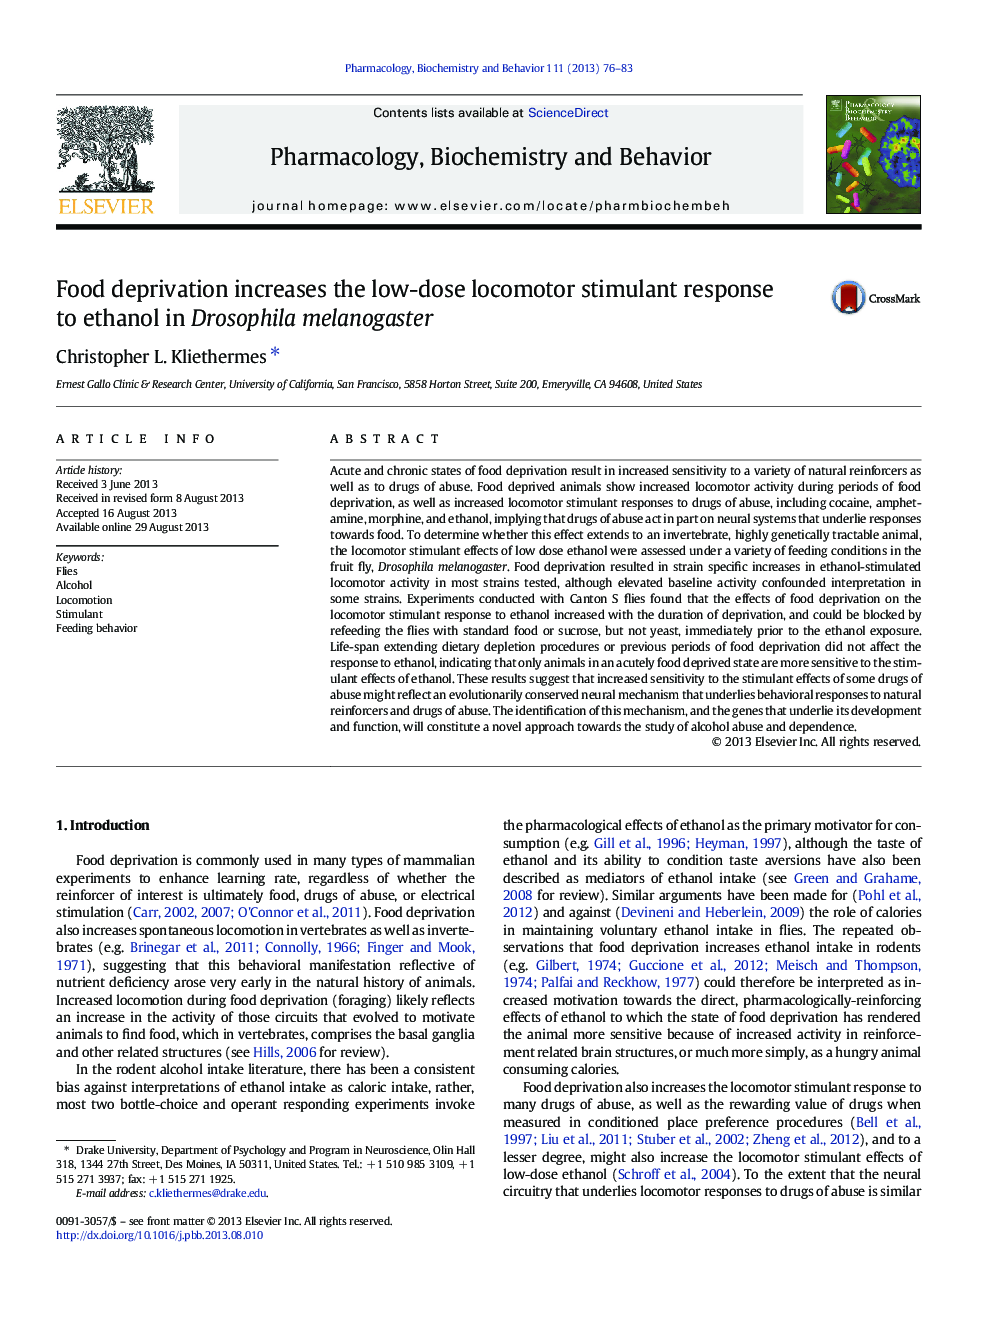 Food deprivation increases the low-dose locomotor stimulant response to ethanol in Drosophila melanogaster